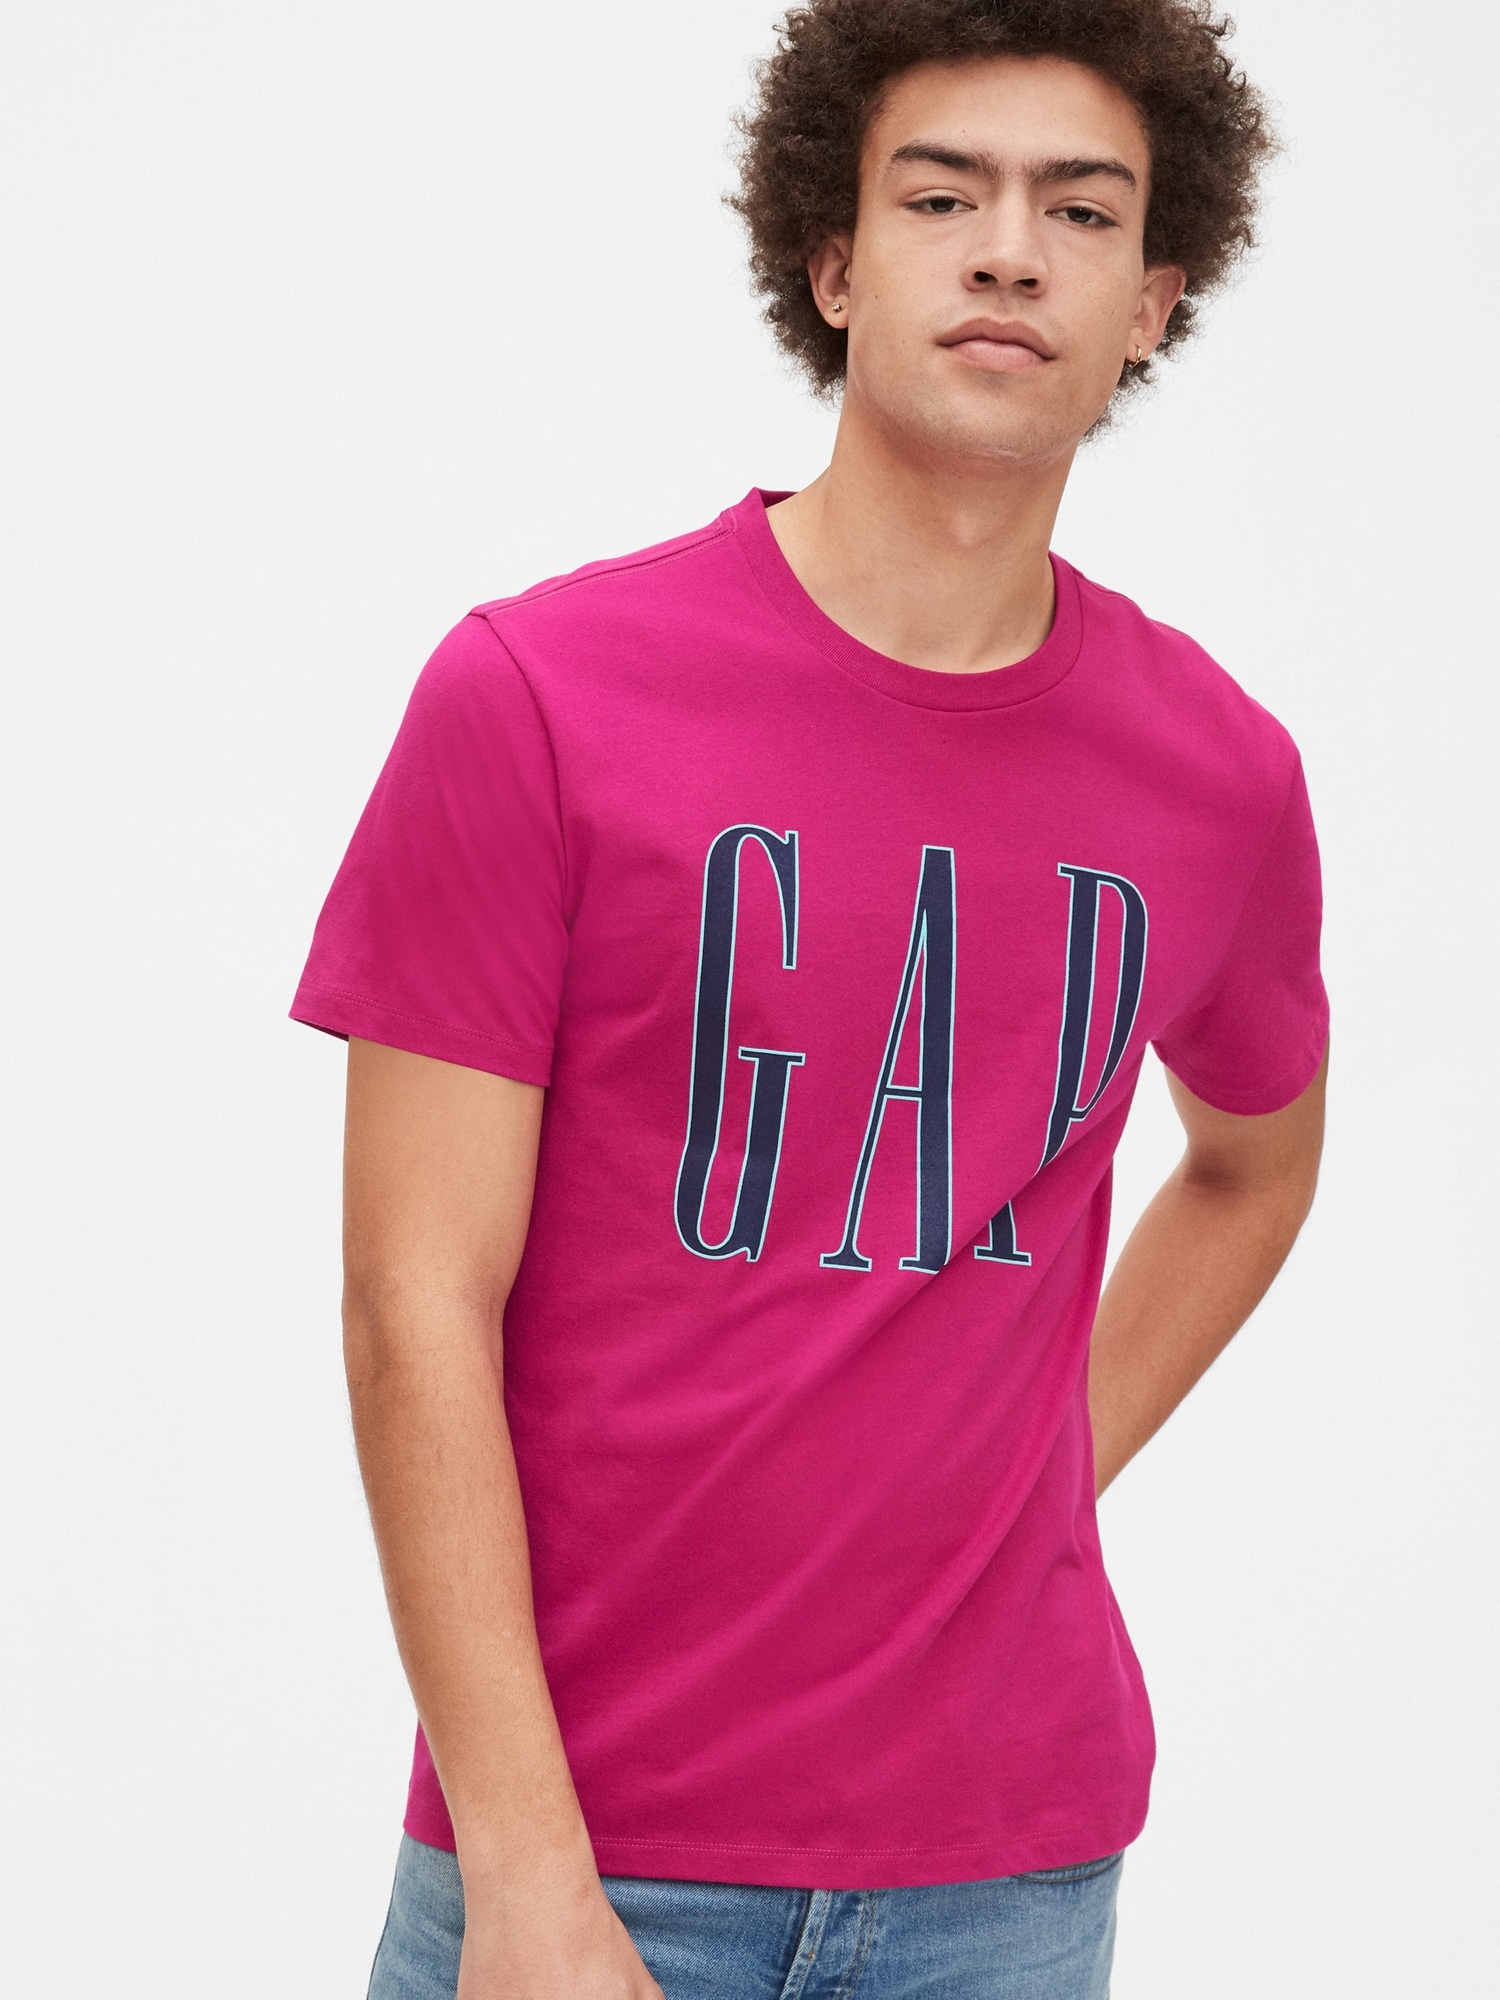 gap pink t shirt